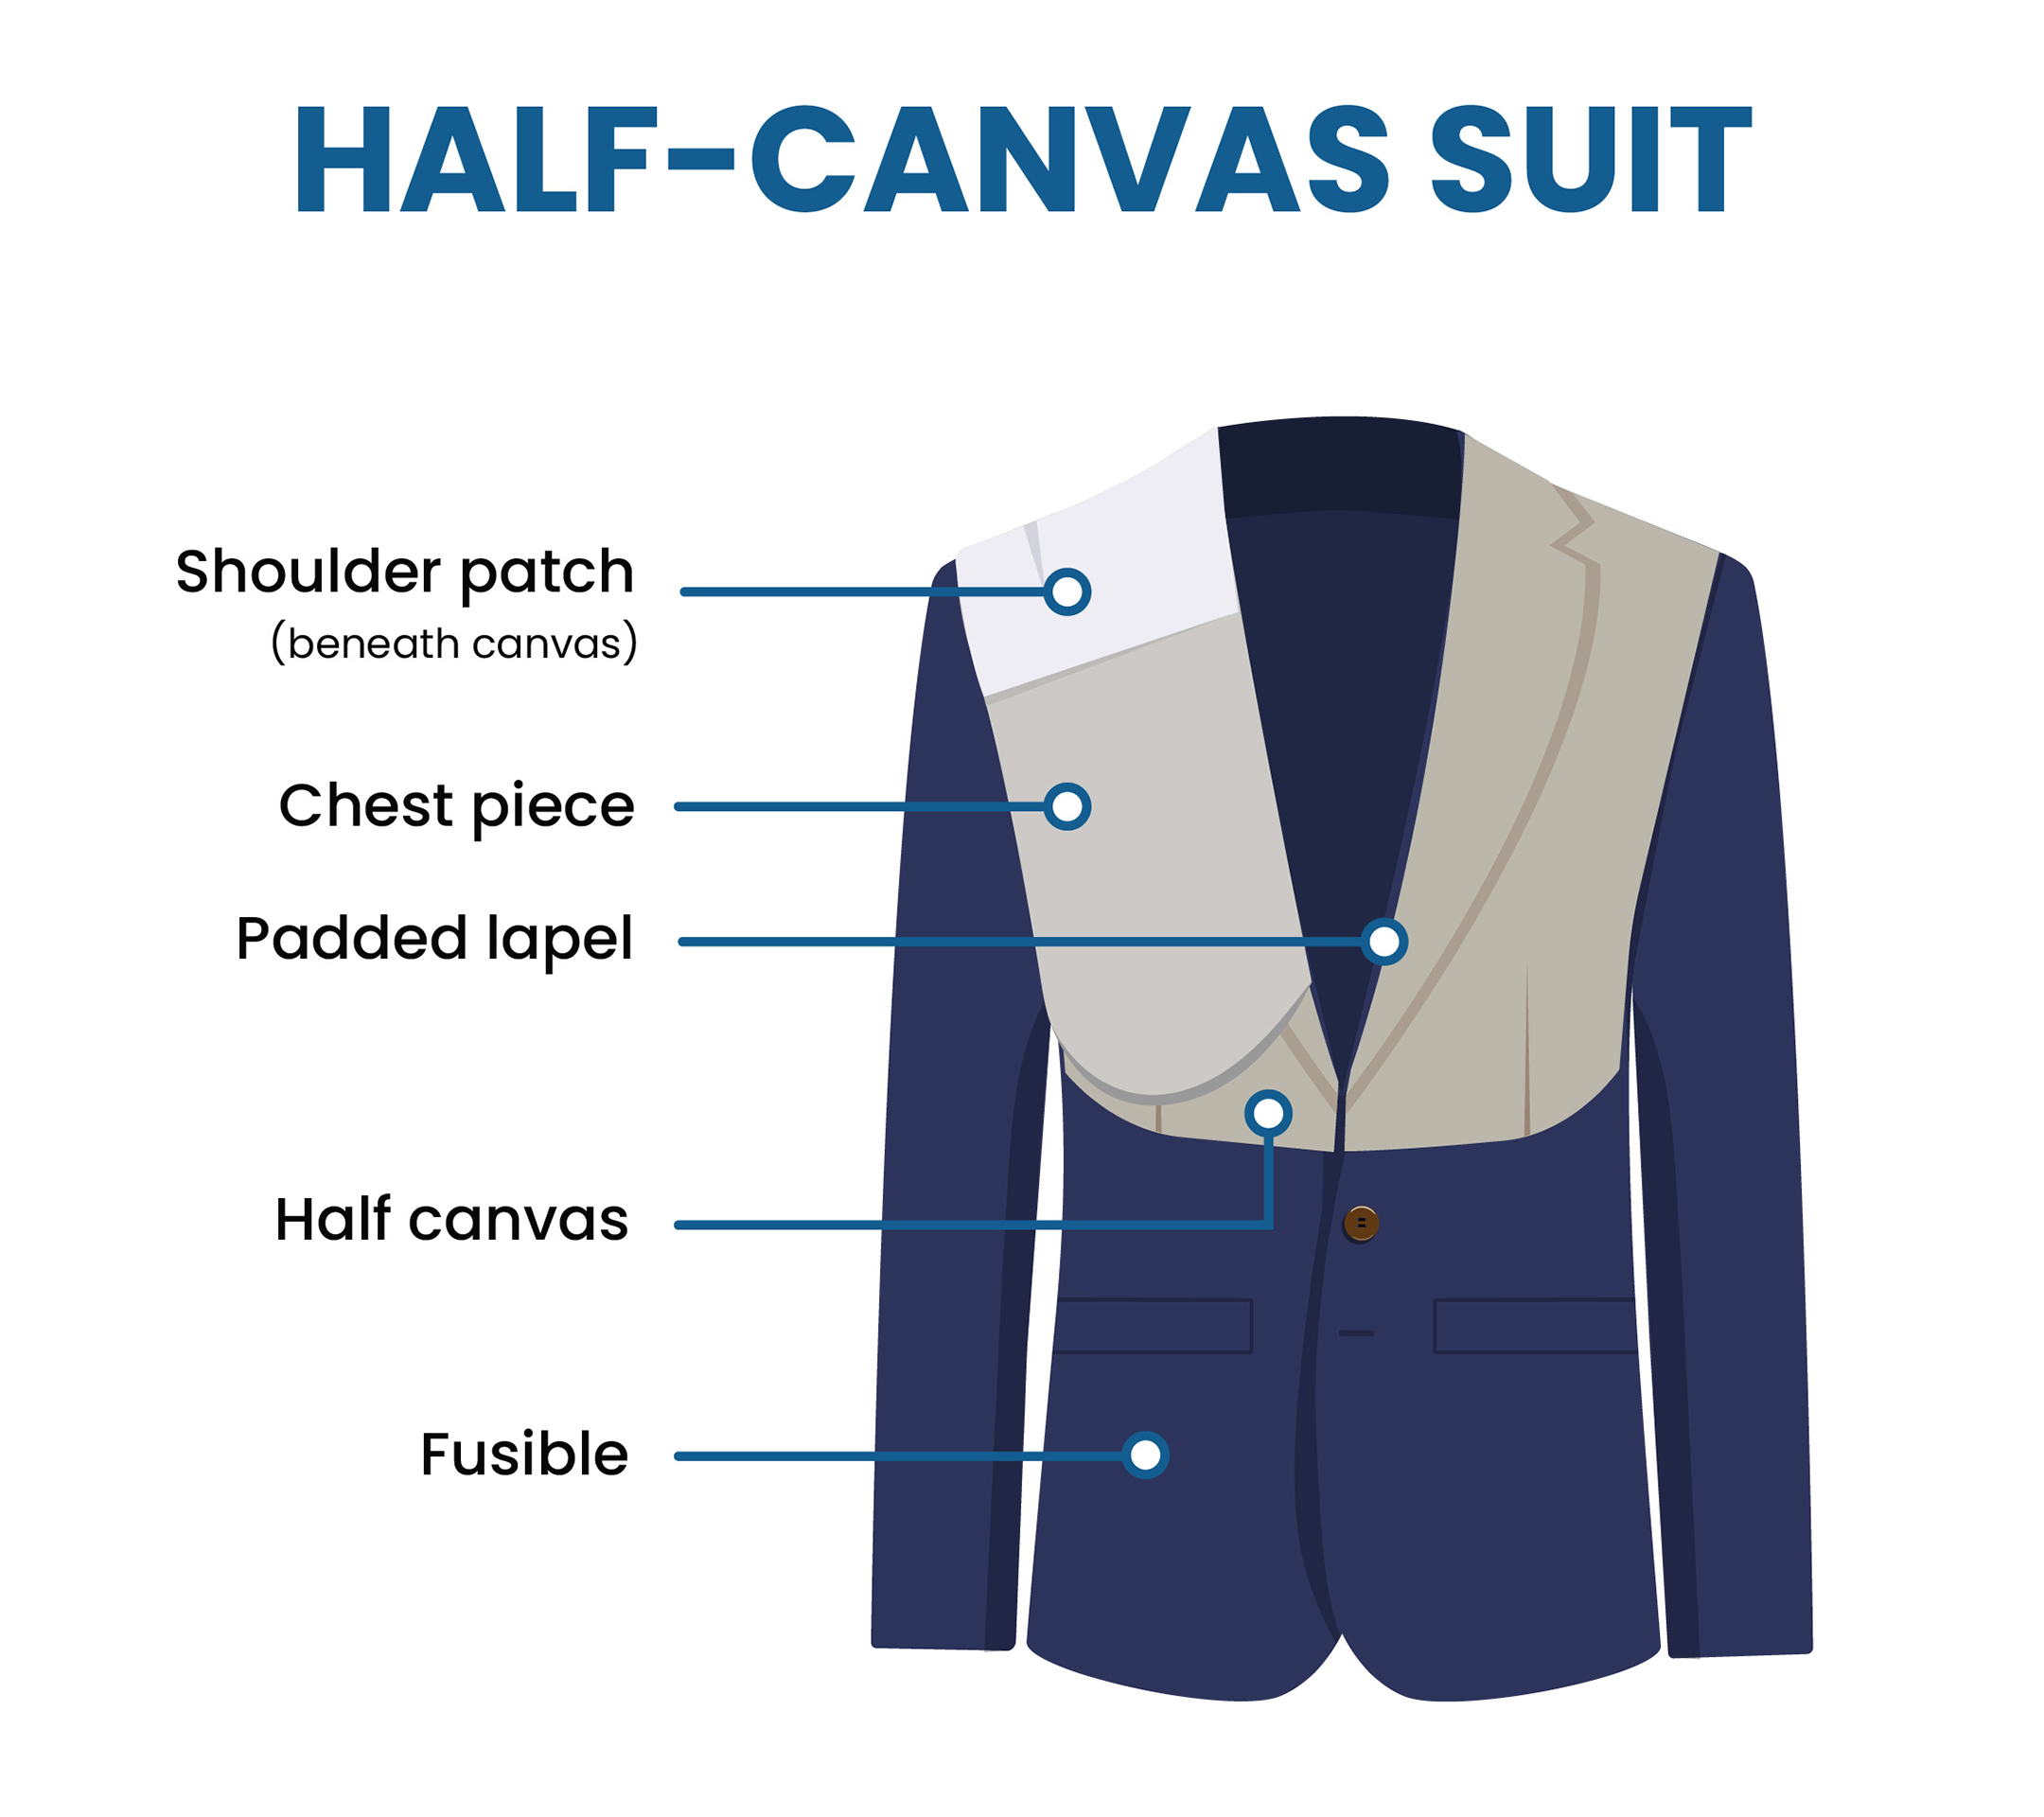 Full Canvas vs. Half Canvas vs. Fused Suit Construction